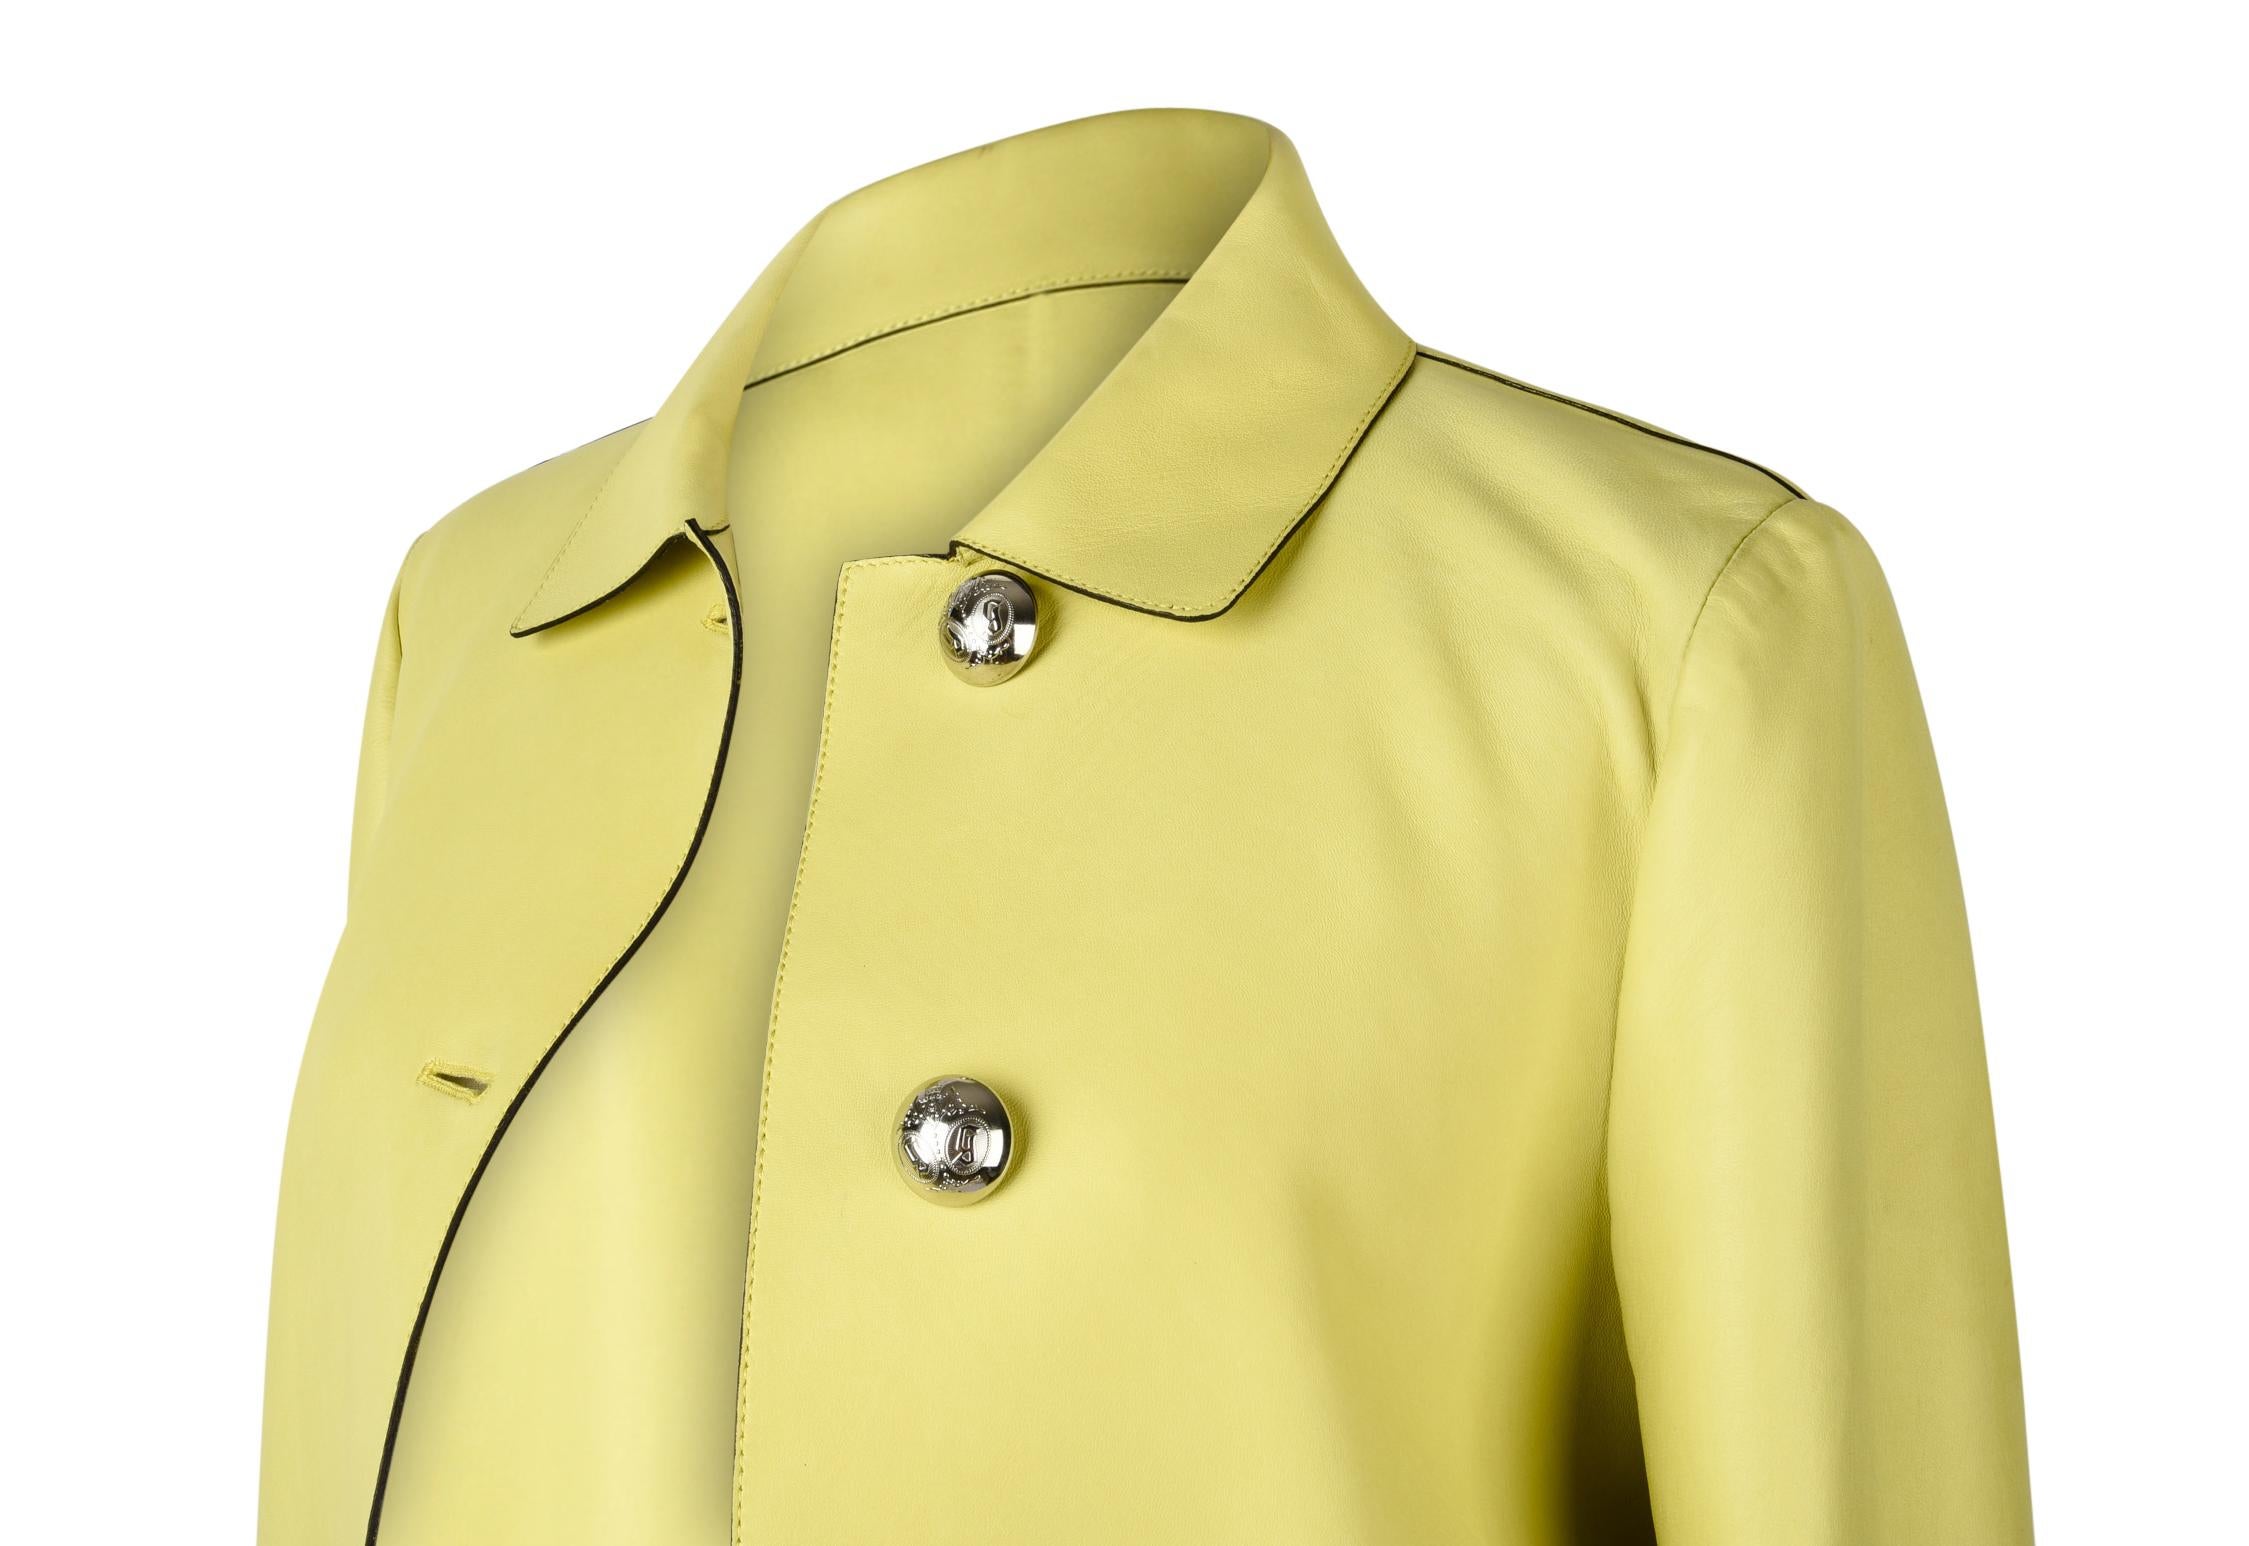 Gucci Coat Lambskin Leather Lime Yellow 40 / 8 1